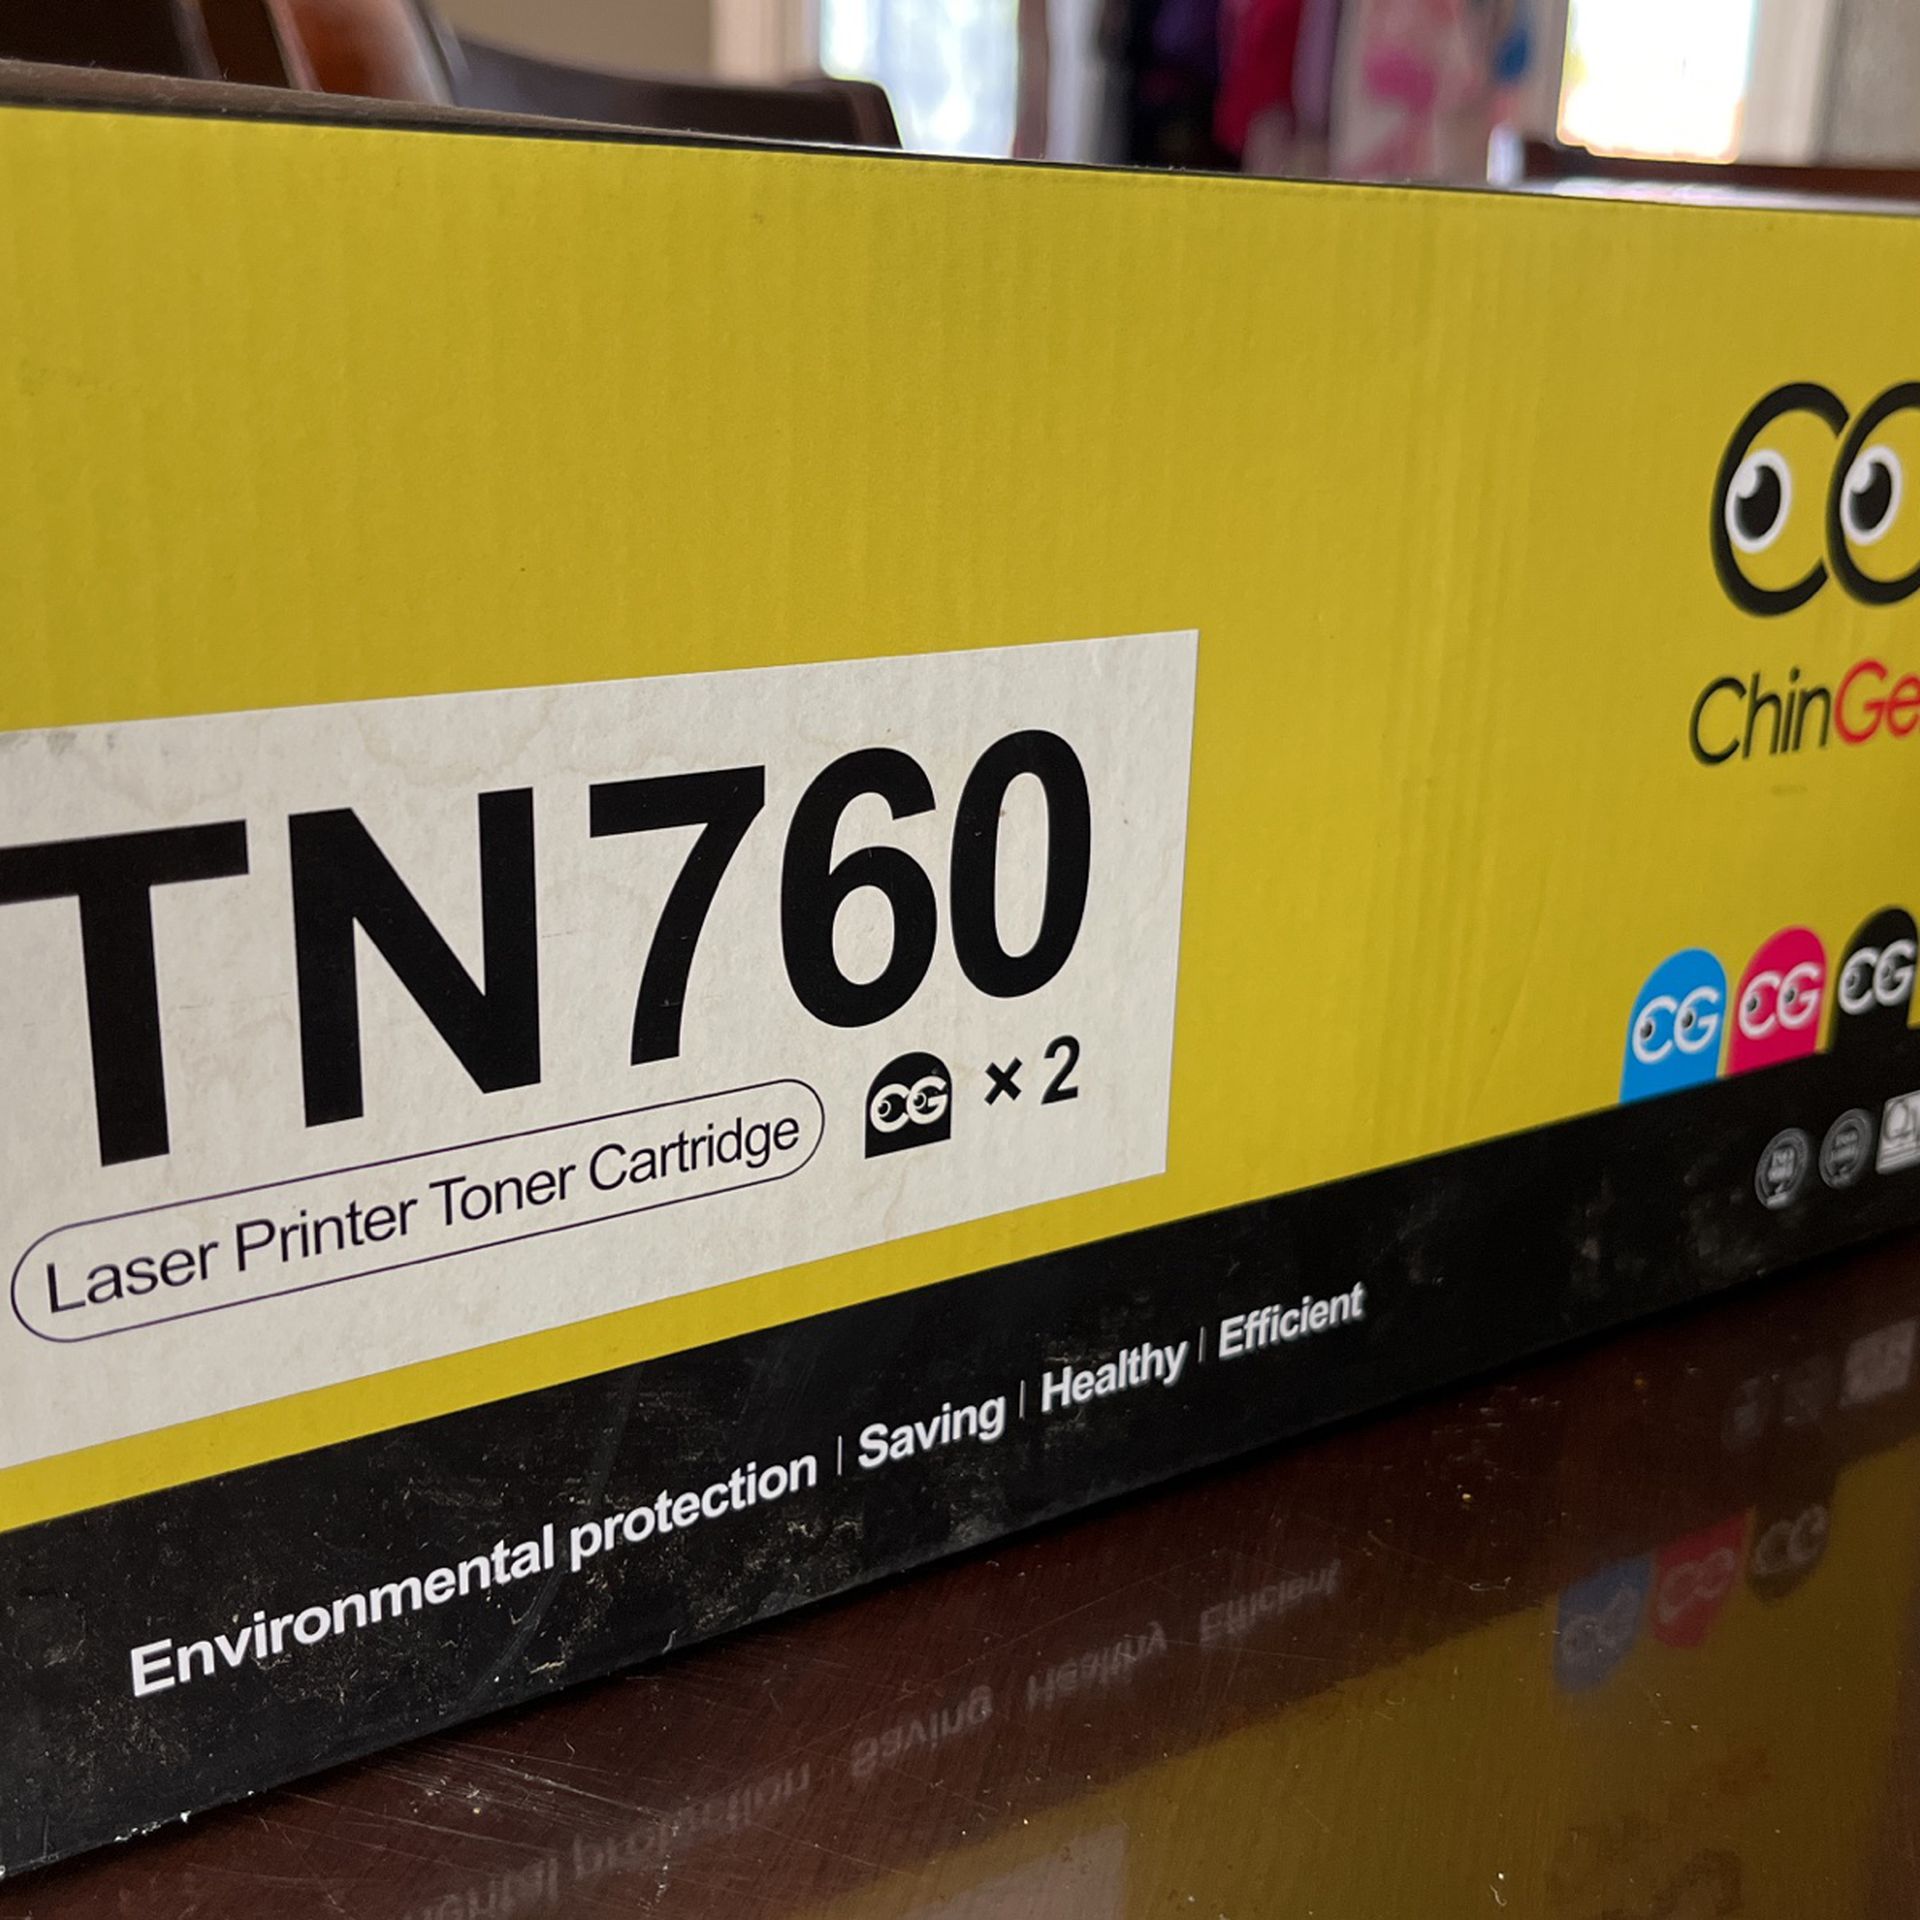 TN760 Laser Printer Toner Cartridge